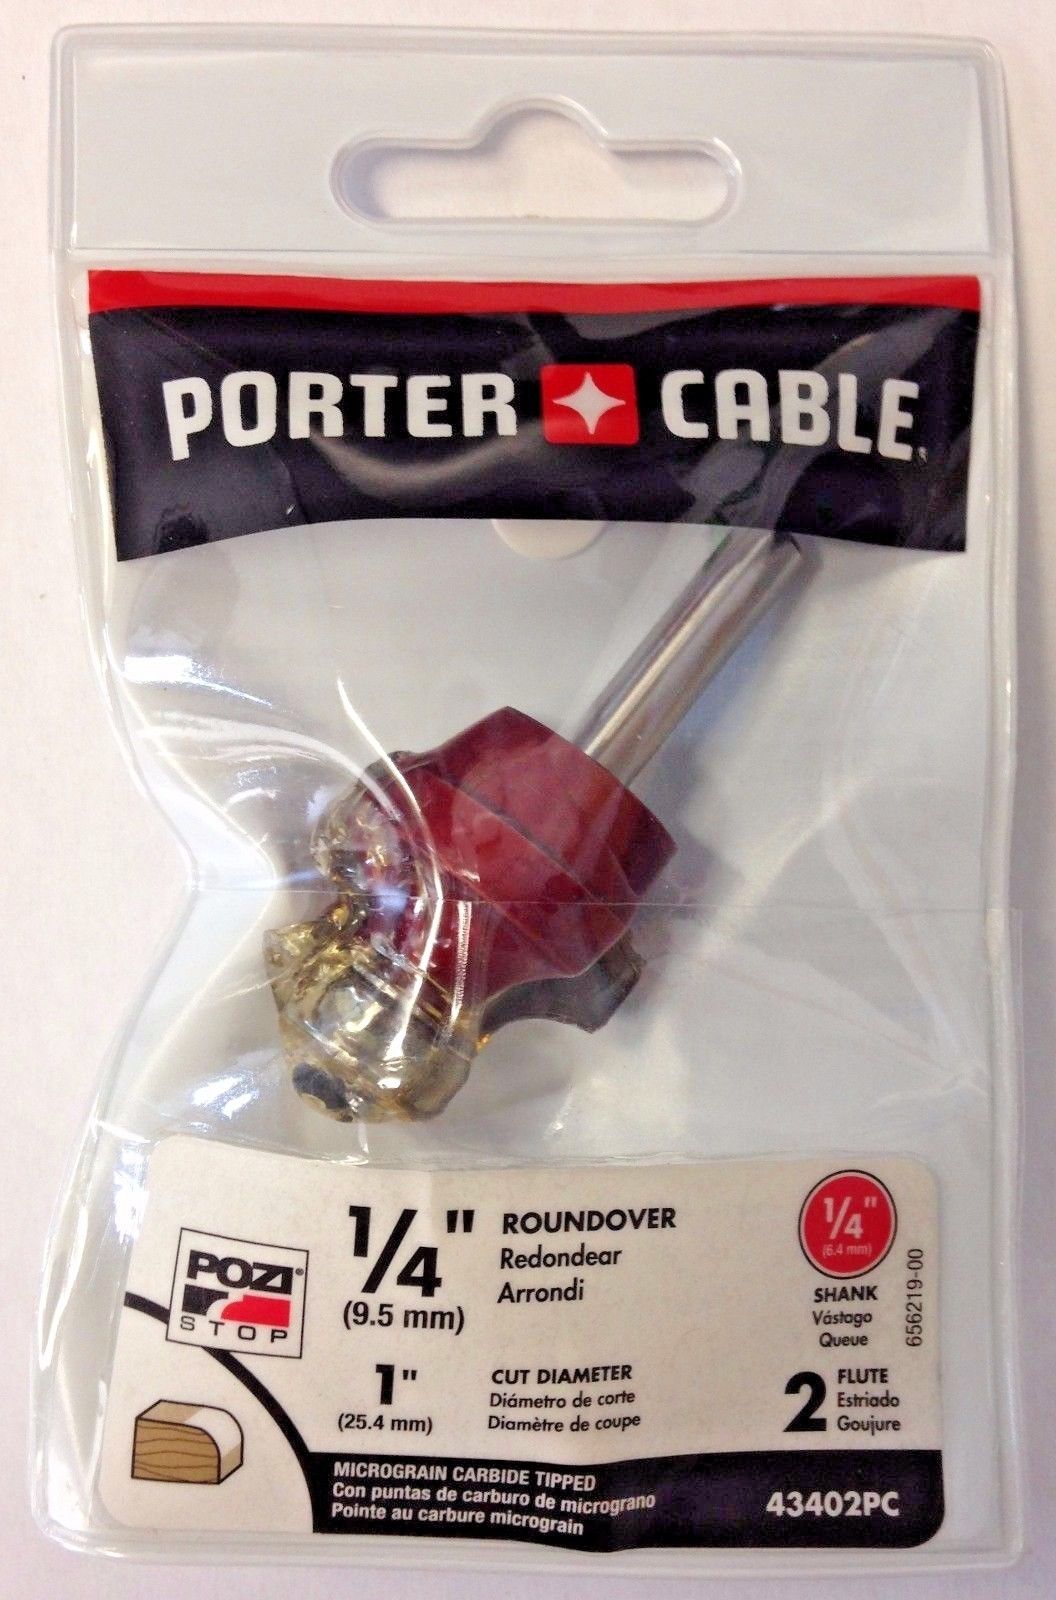 Porter Cable 43402PC 1/4" Roundover 2 Flute Carbide Tipped Router Bit